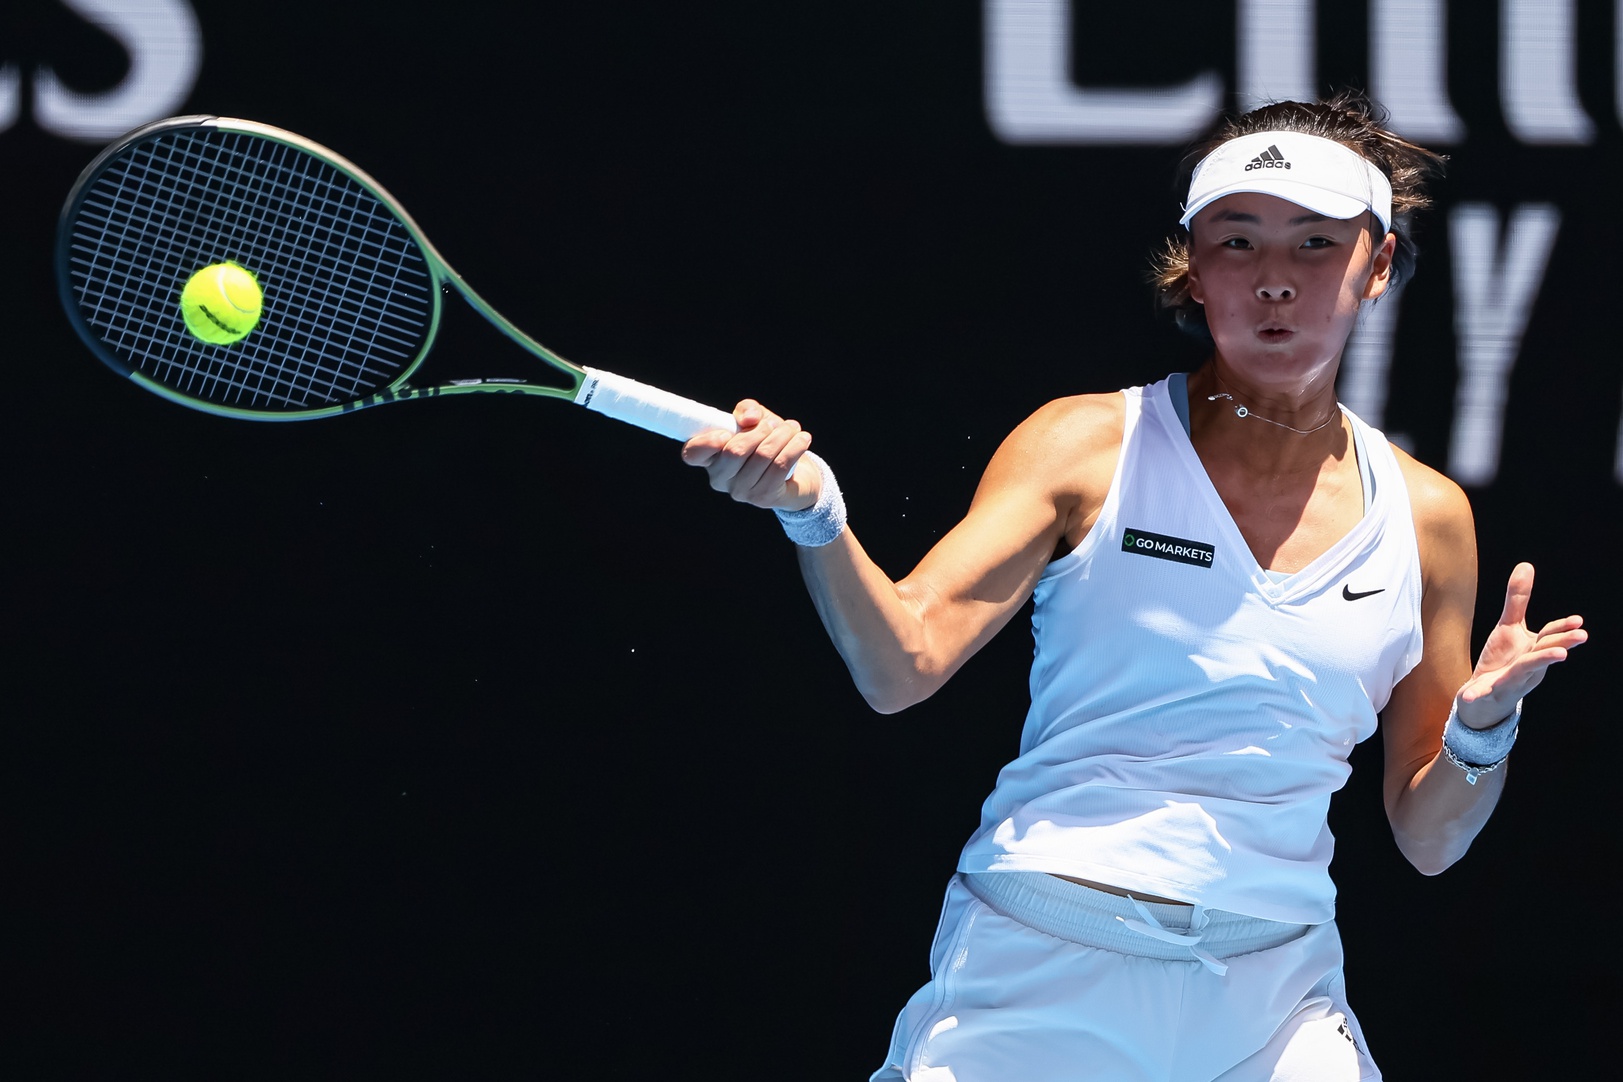 WTA Hobart quarterfinalist Yuan Yue in action.